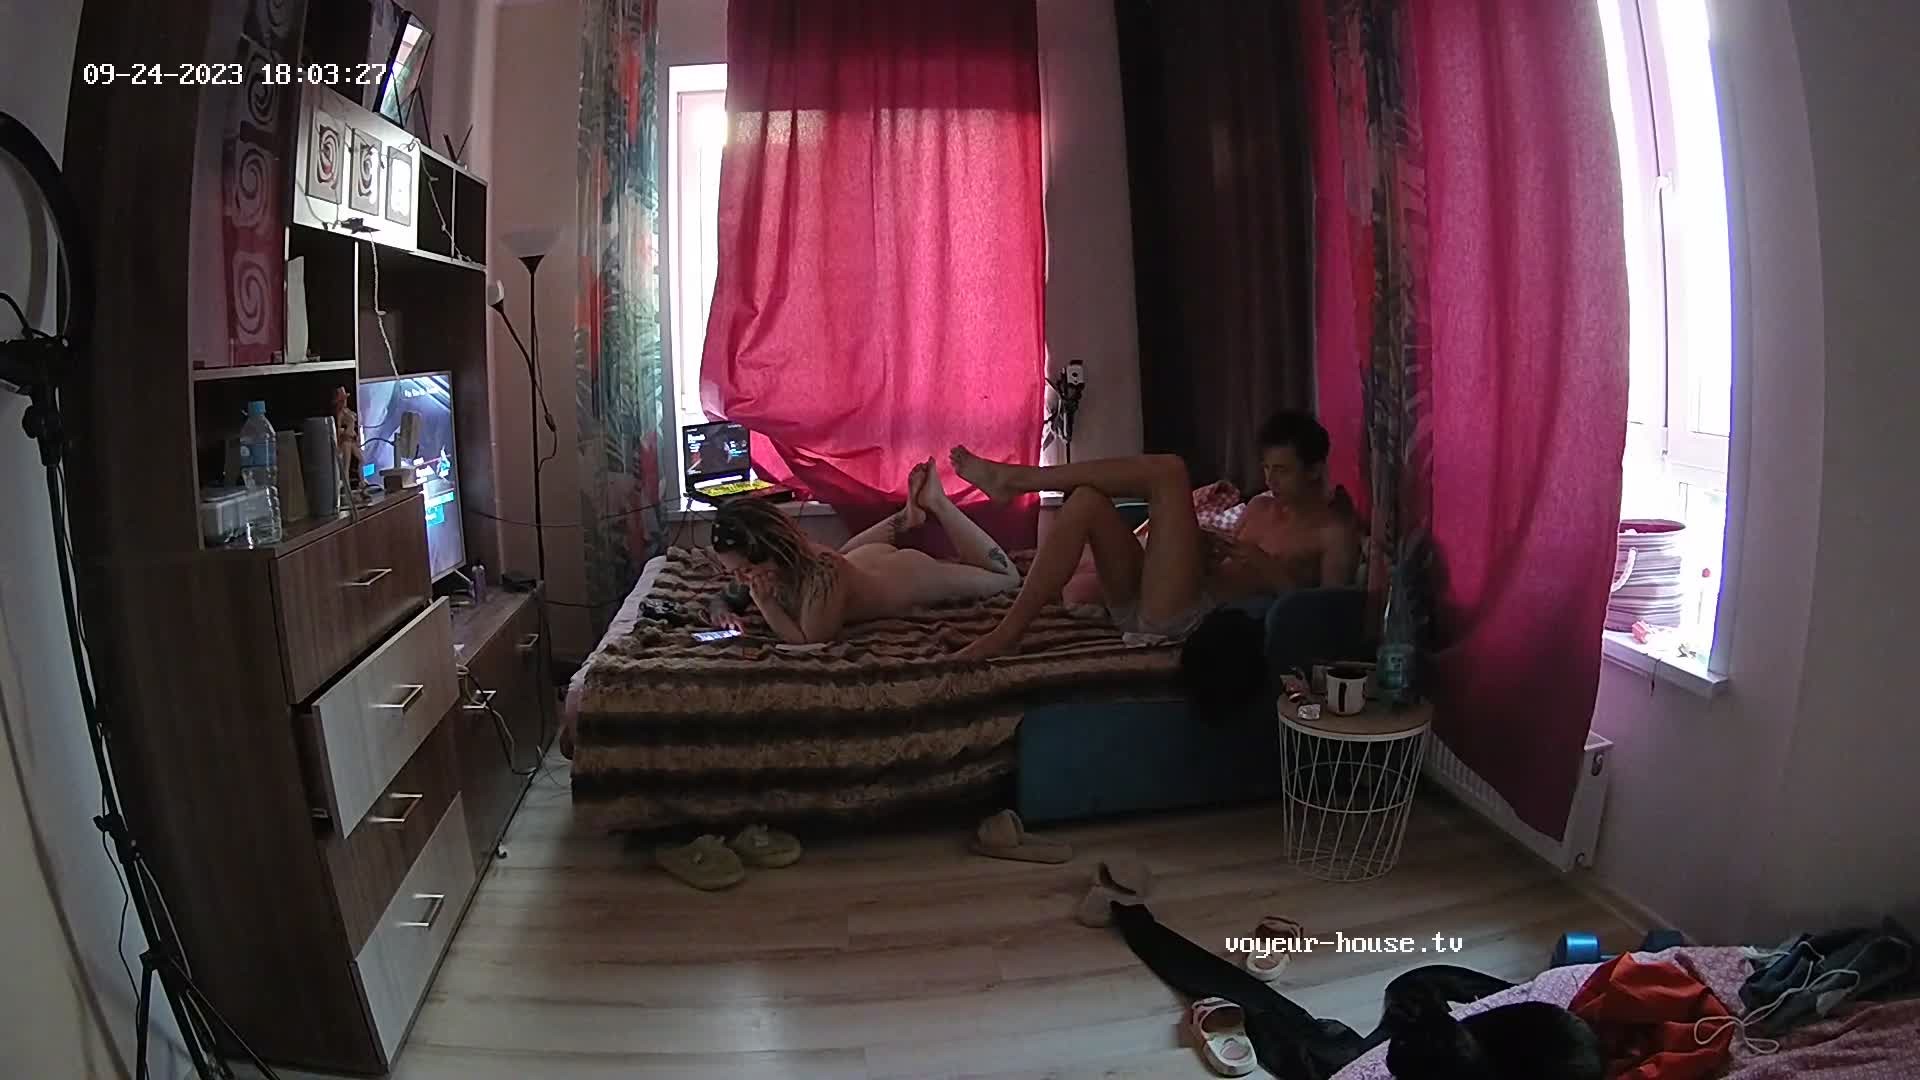 Fisa watching TV naked, Sep24/23